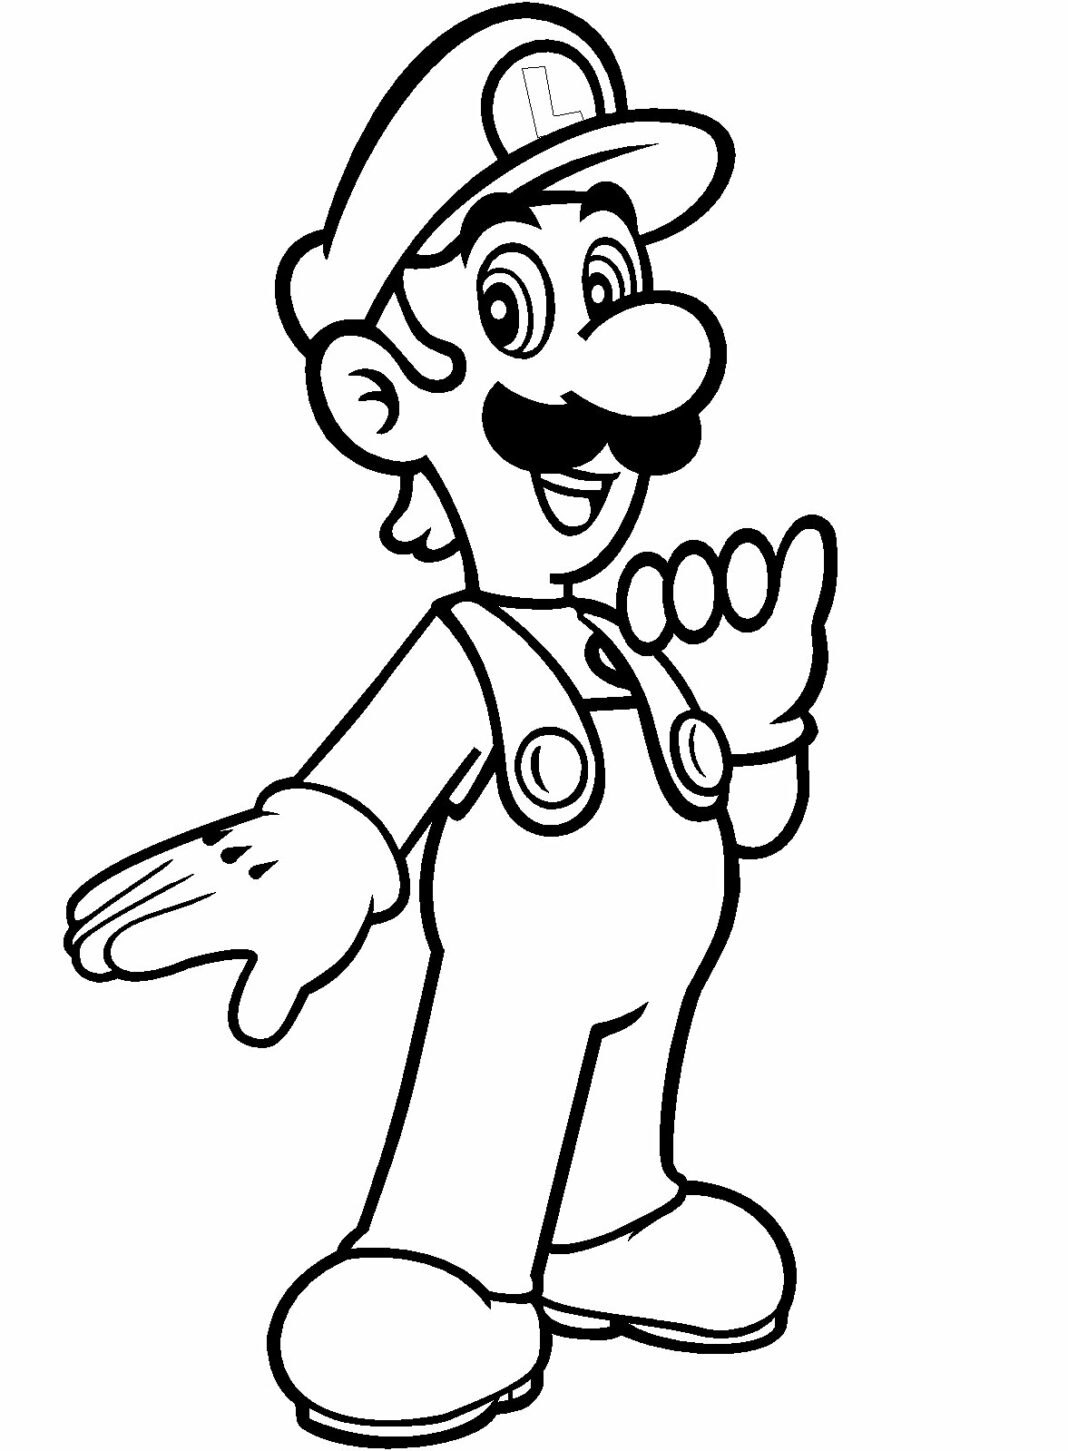 väritys sivu Luigi pelistä mario bros